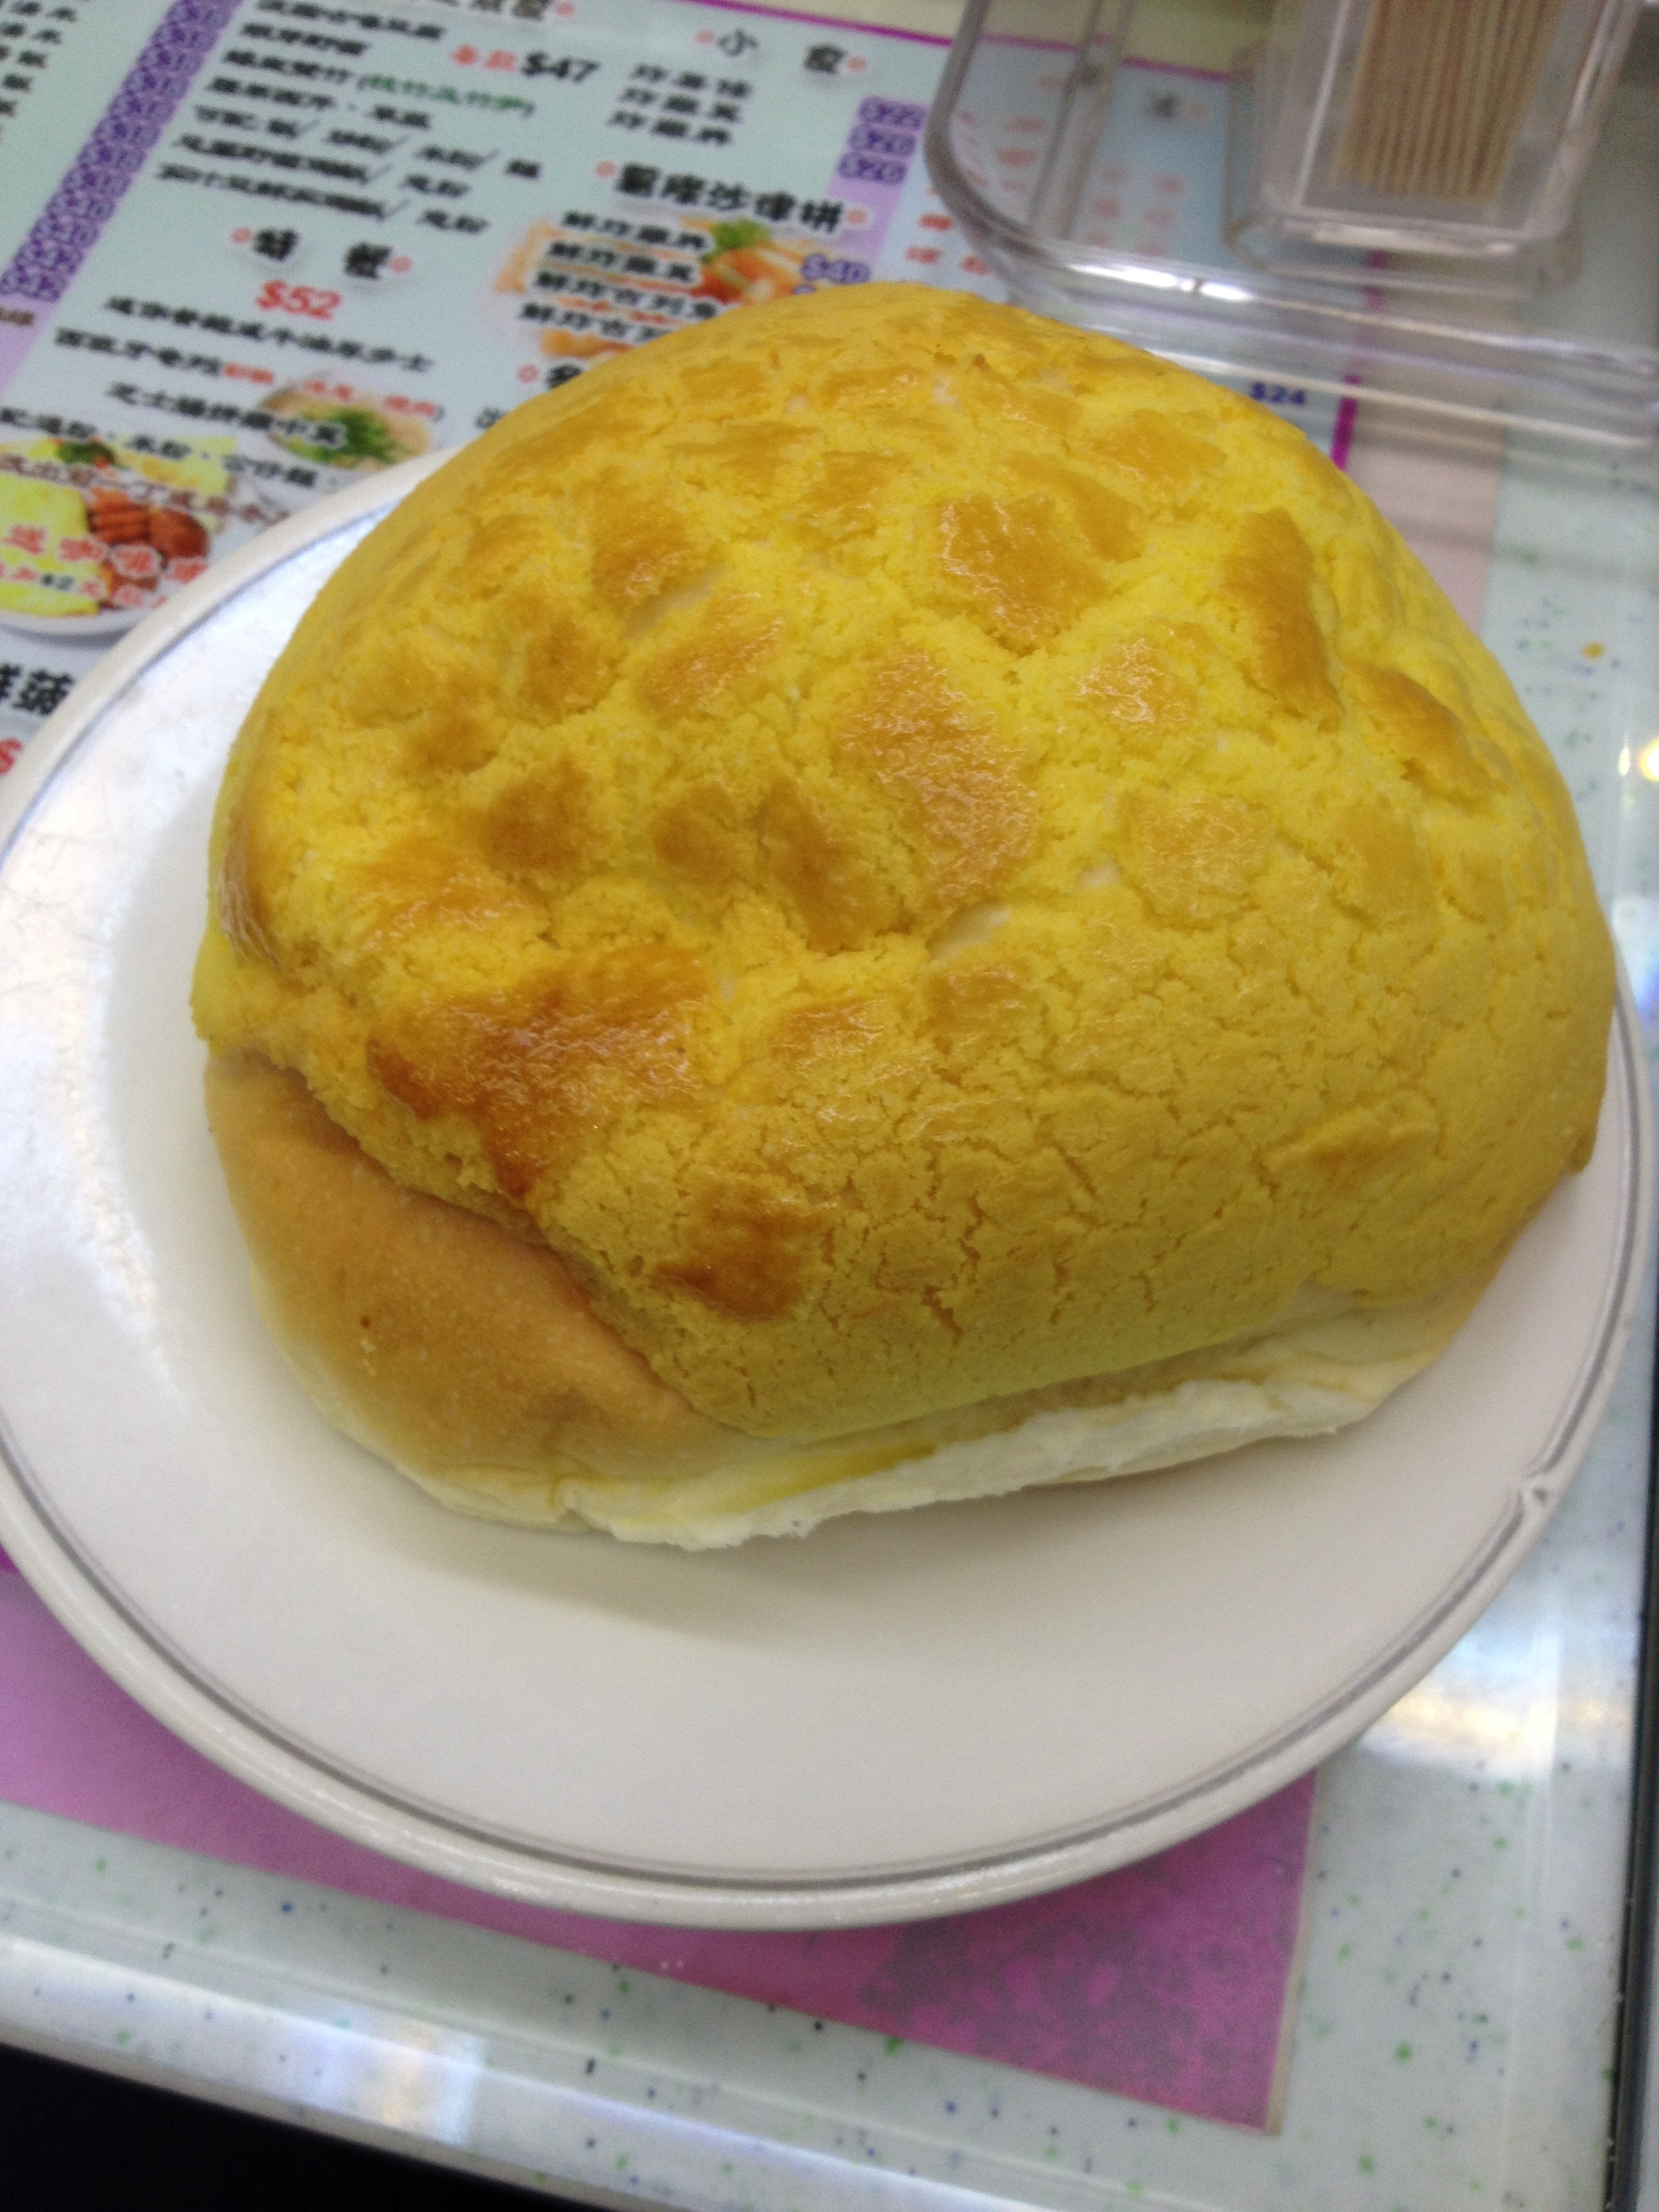 Pineapple bun from Hong Kong Foodie Tours